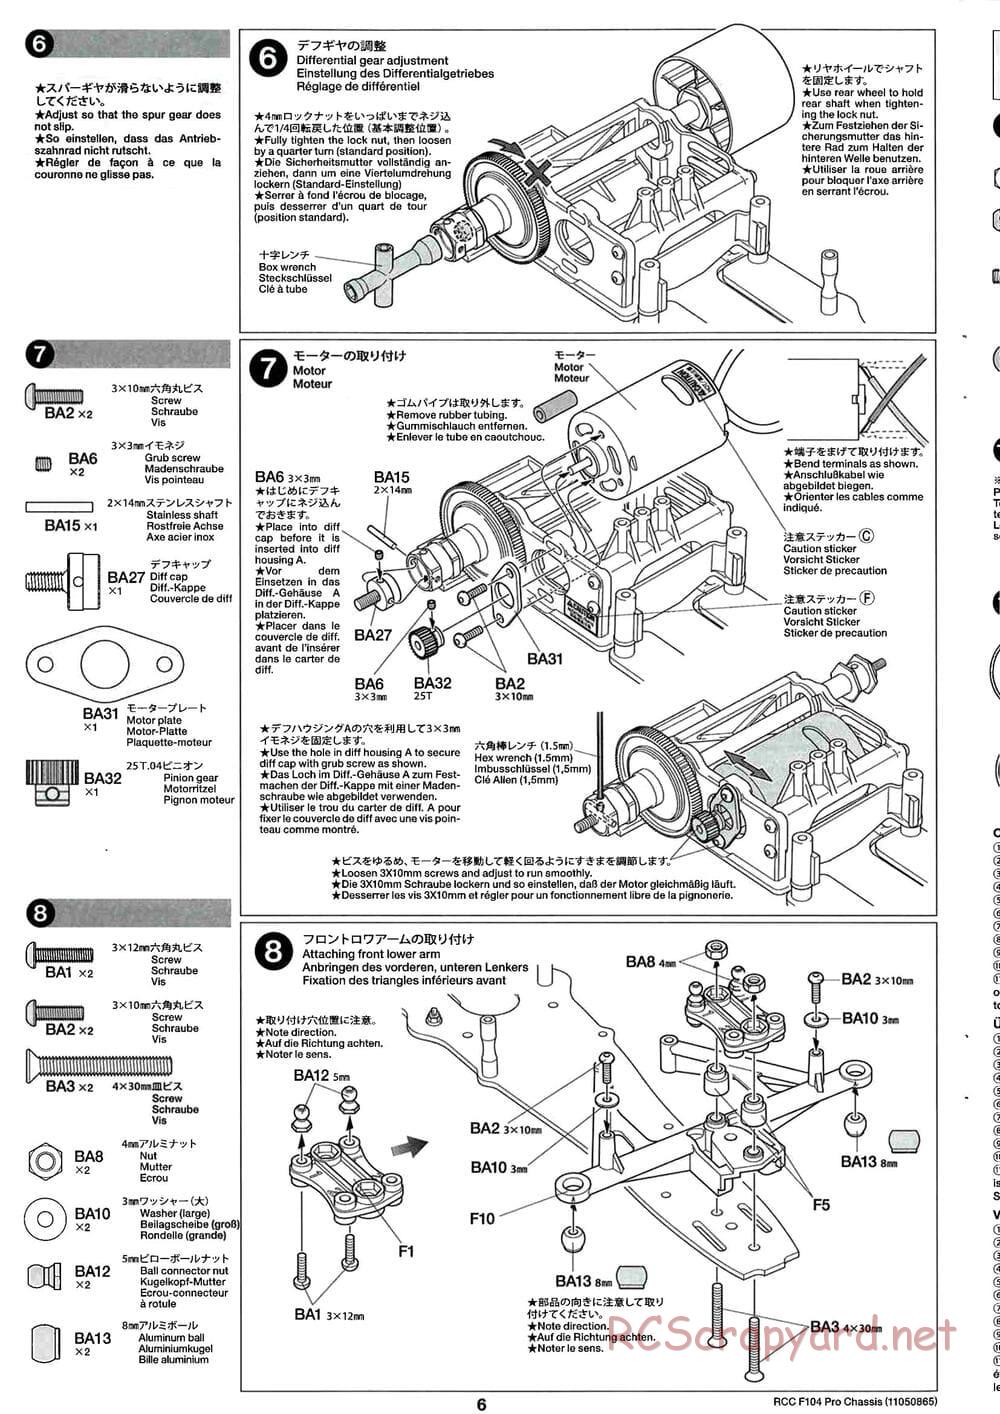 Tamiya - F104 Pro Chassis - Manual - Page 6